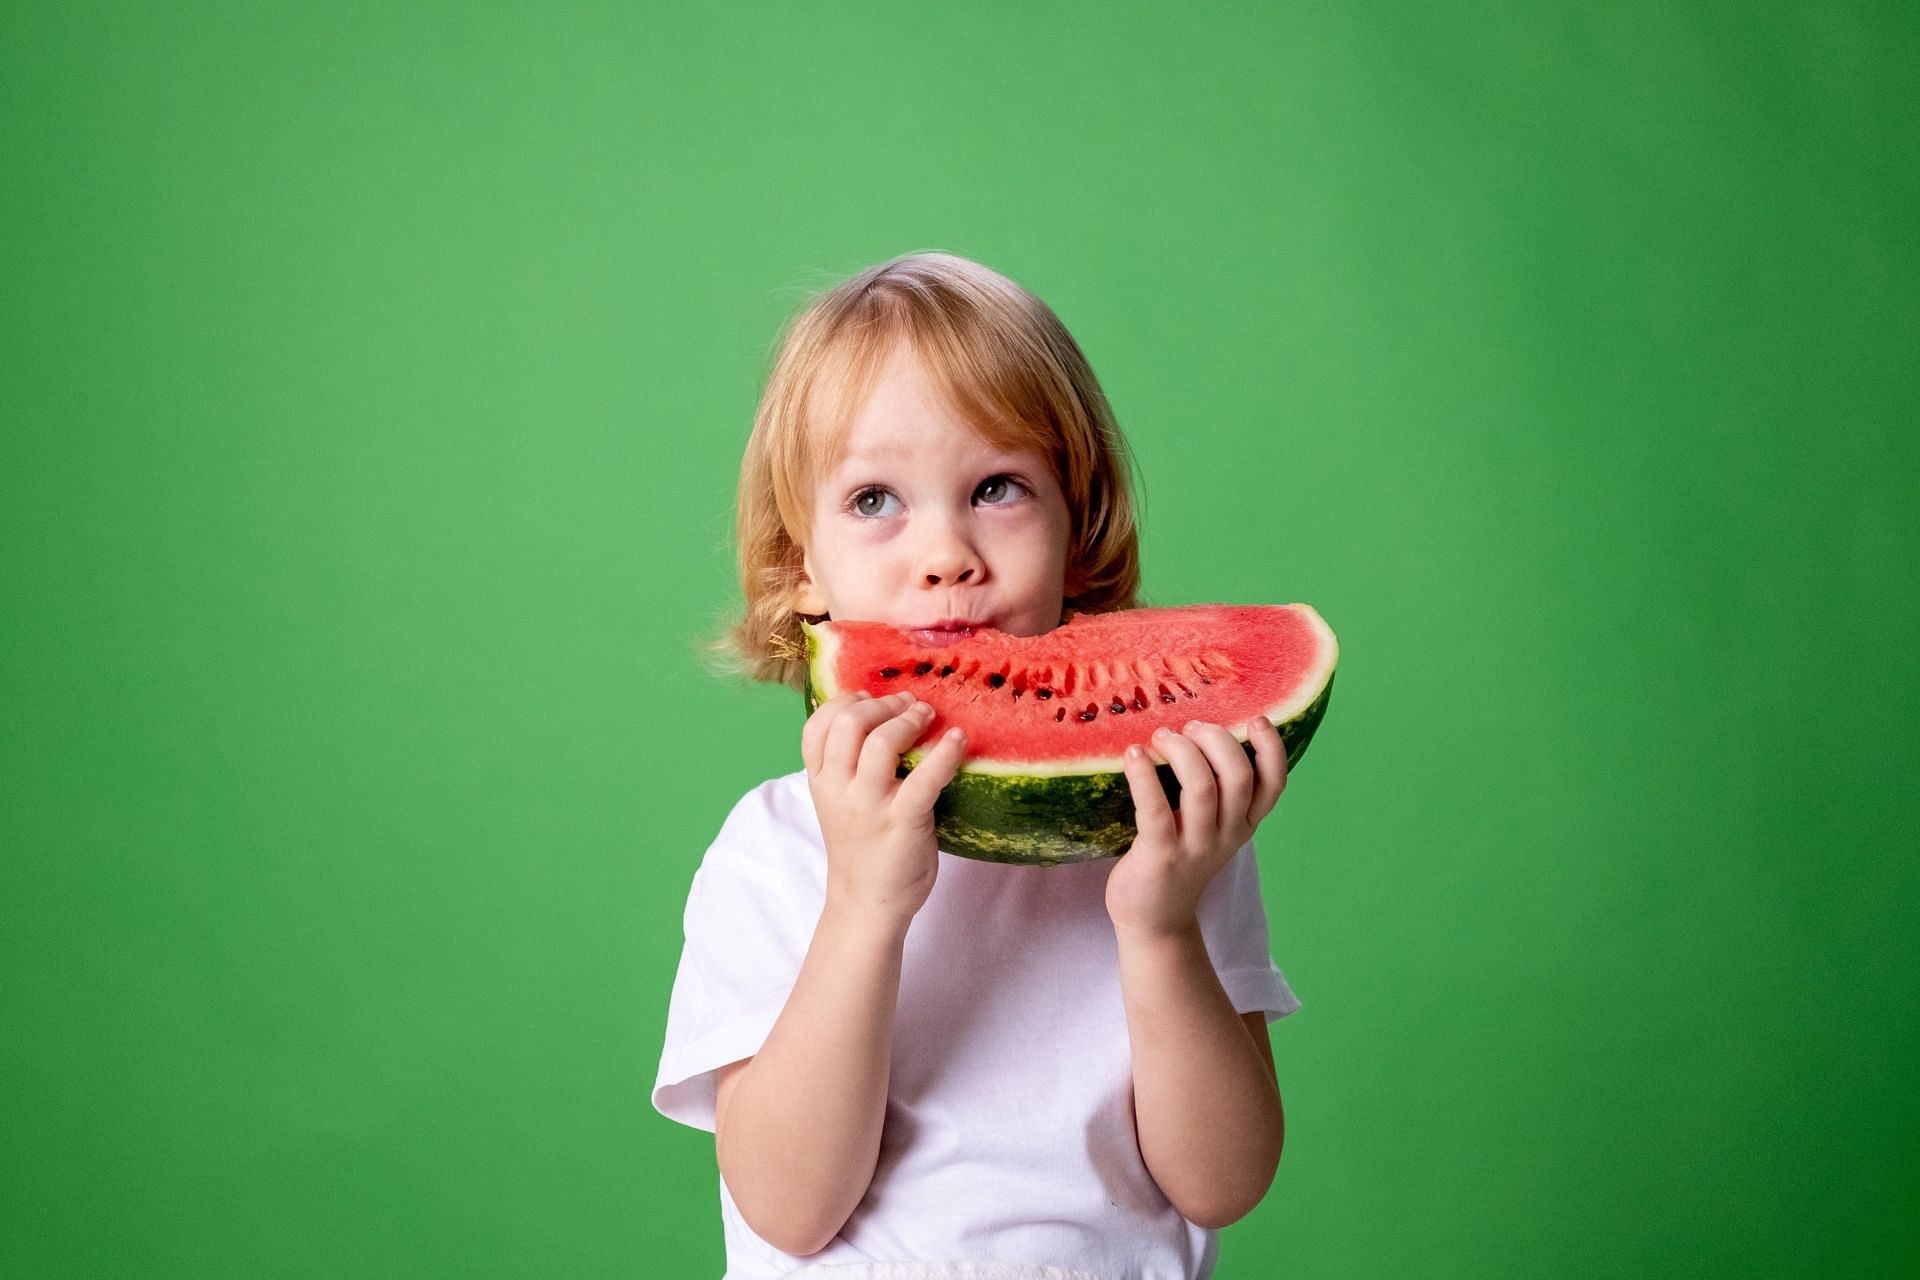 Mindful eating helps children engage their senses. (Image via Pexels/Cottonbro)